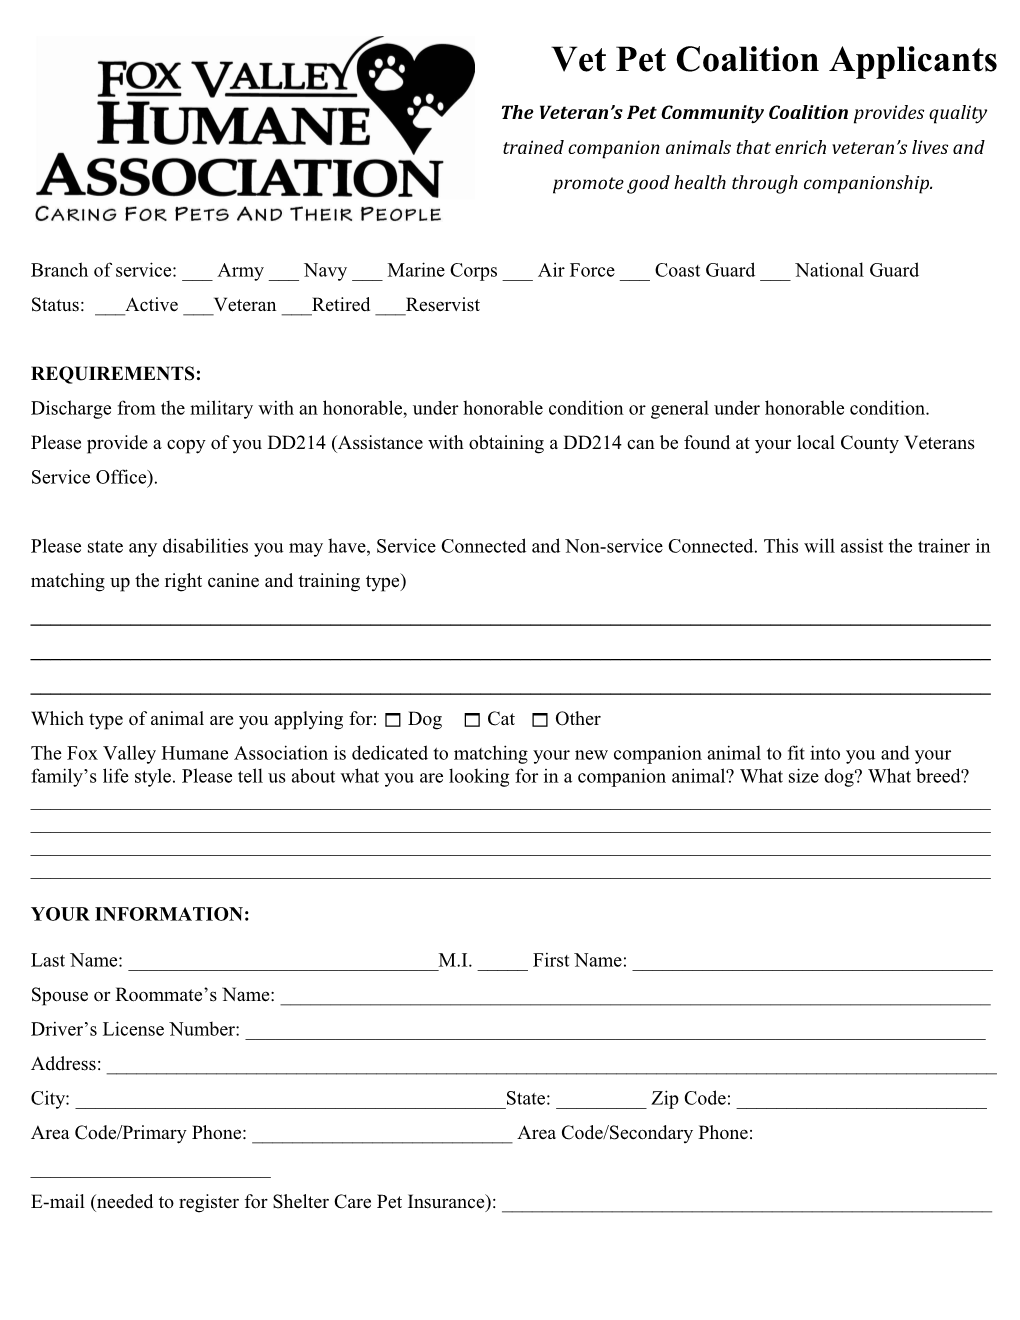 FVHA Adoption Application